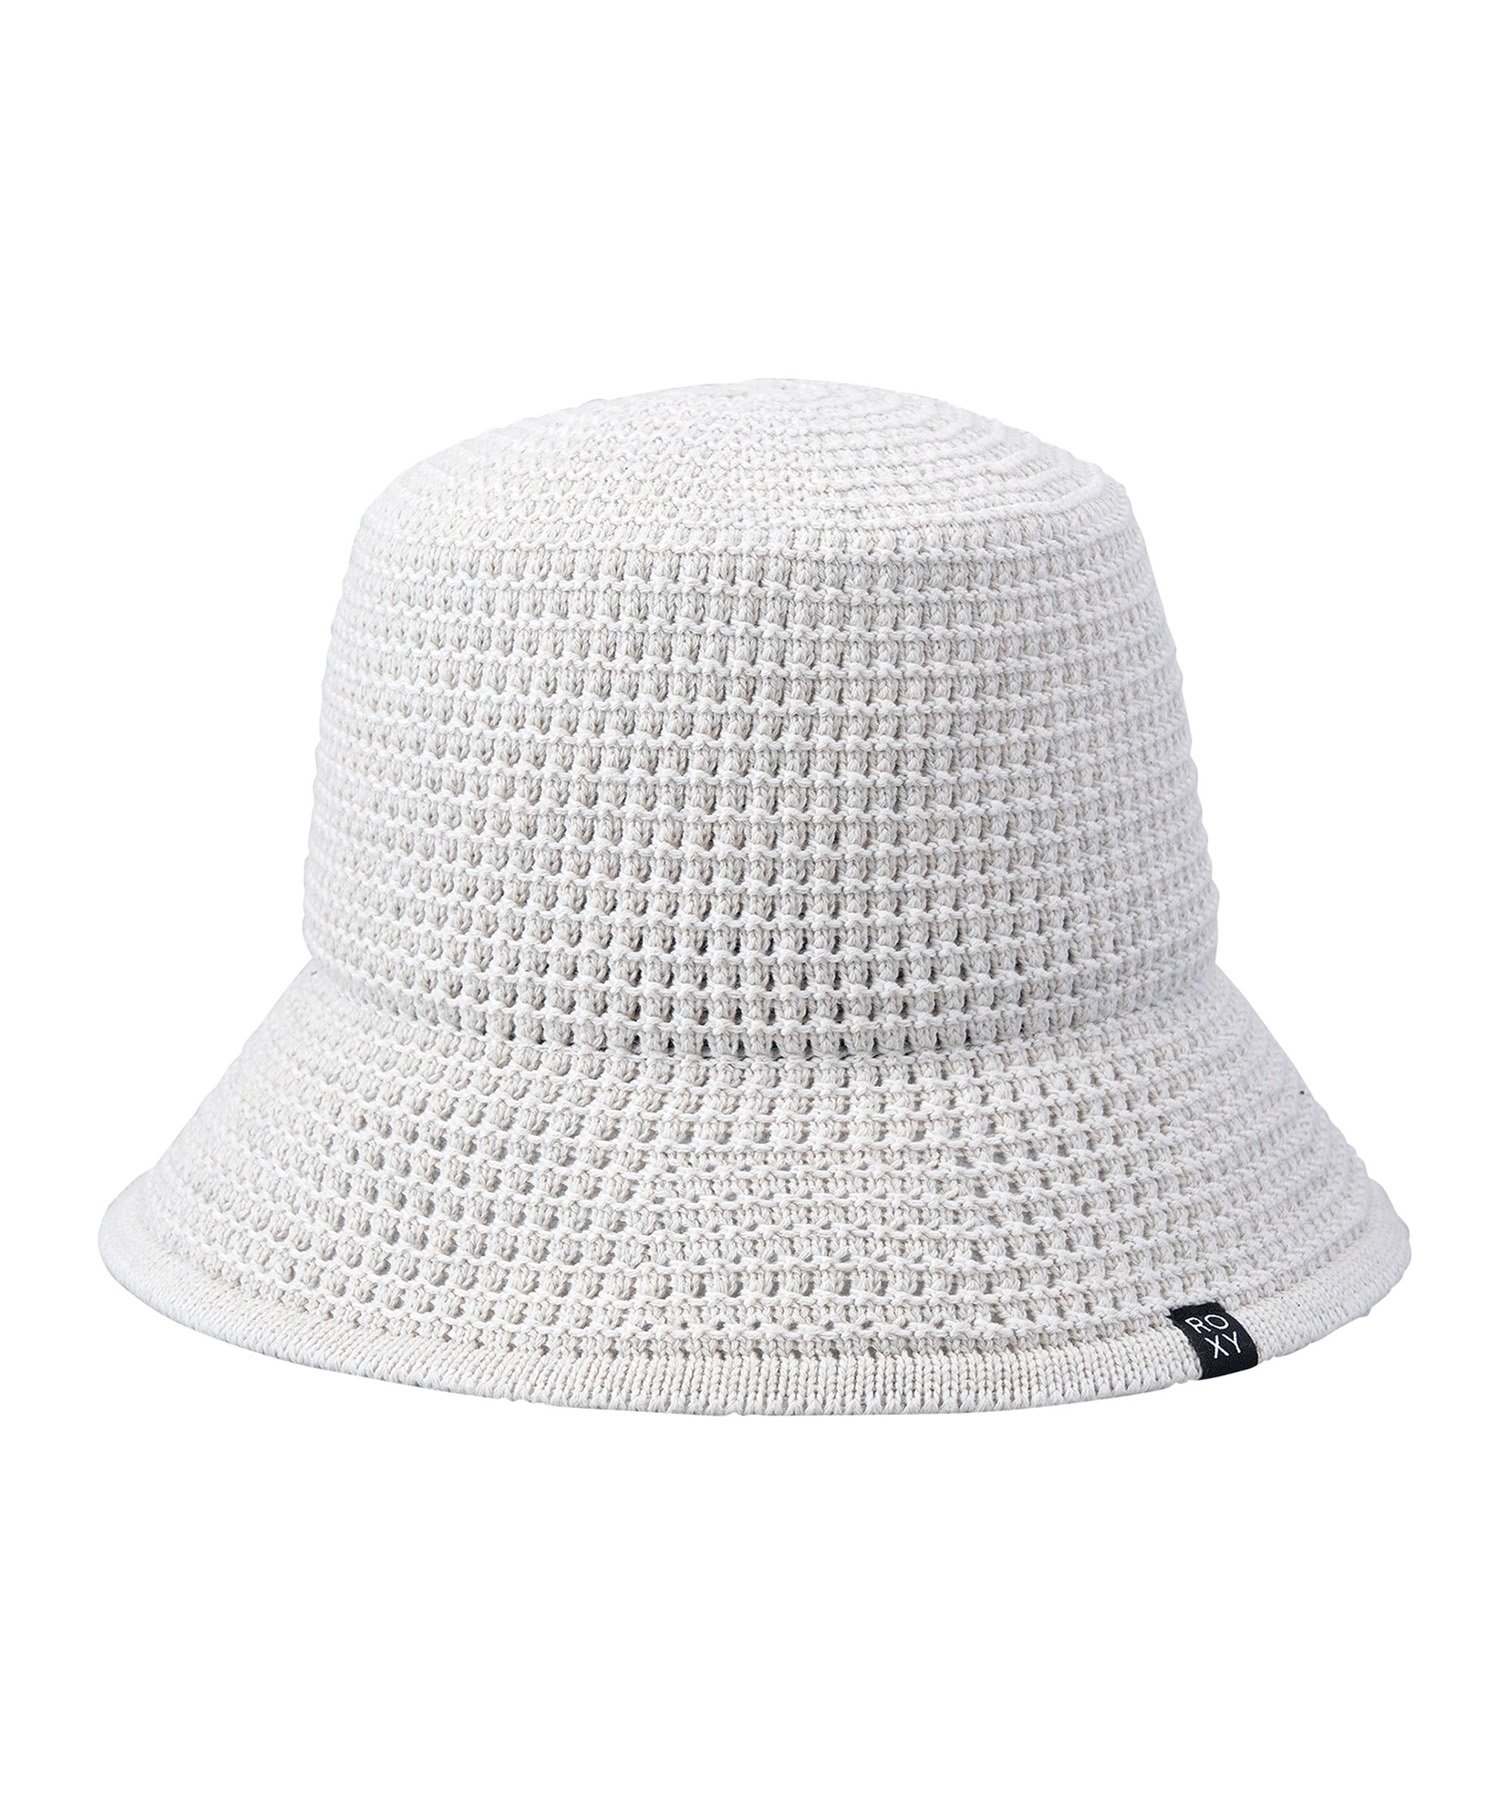 ROXY ロキシー DAY DREAMER ハット 帽子 フリーサイズ RHT241321(BRN-FREE)